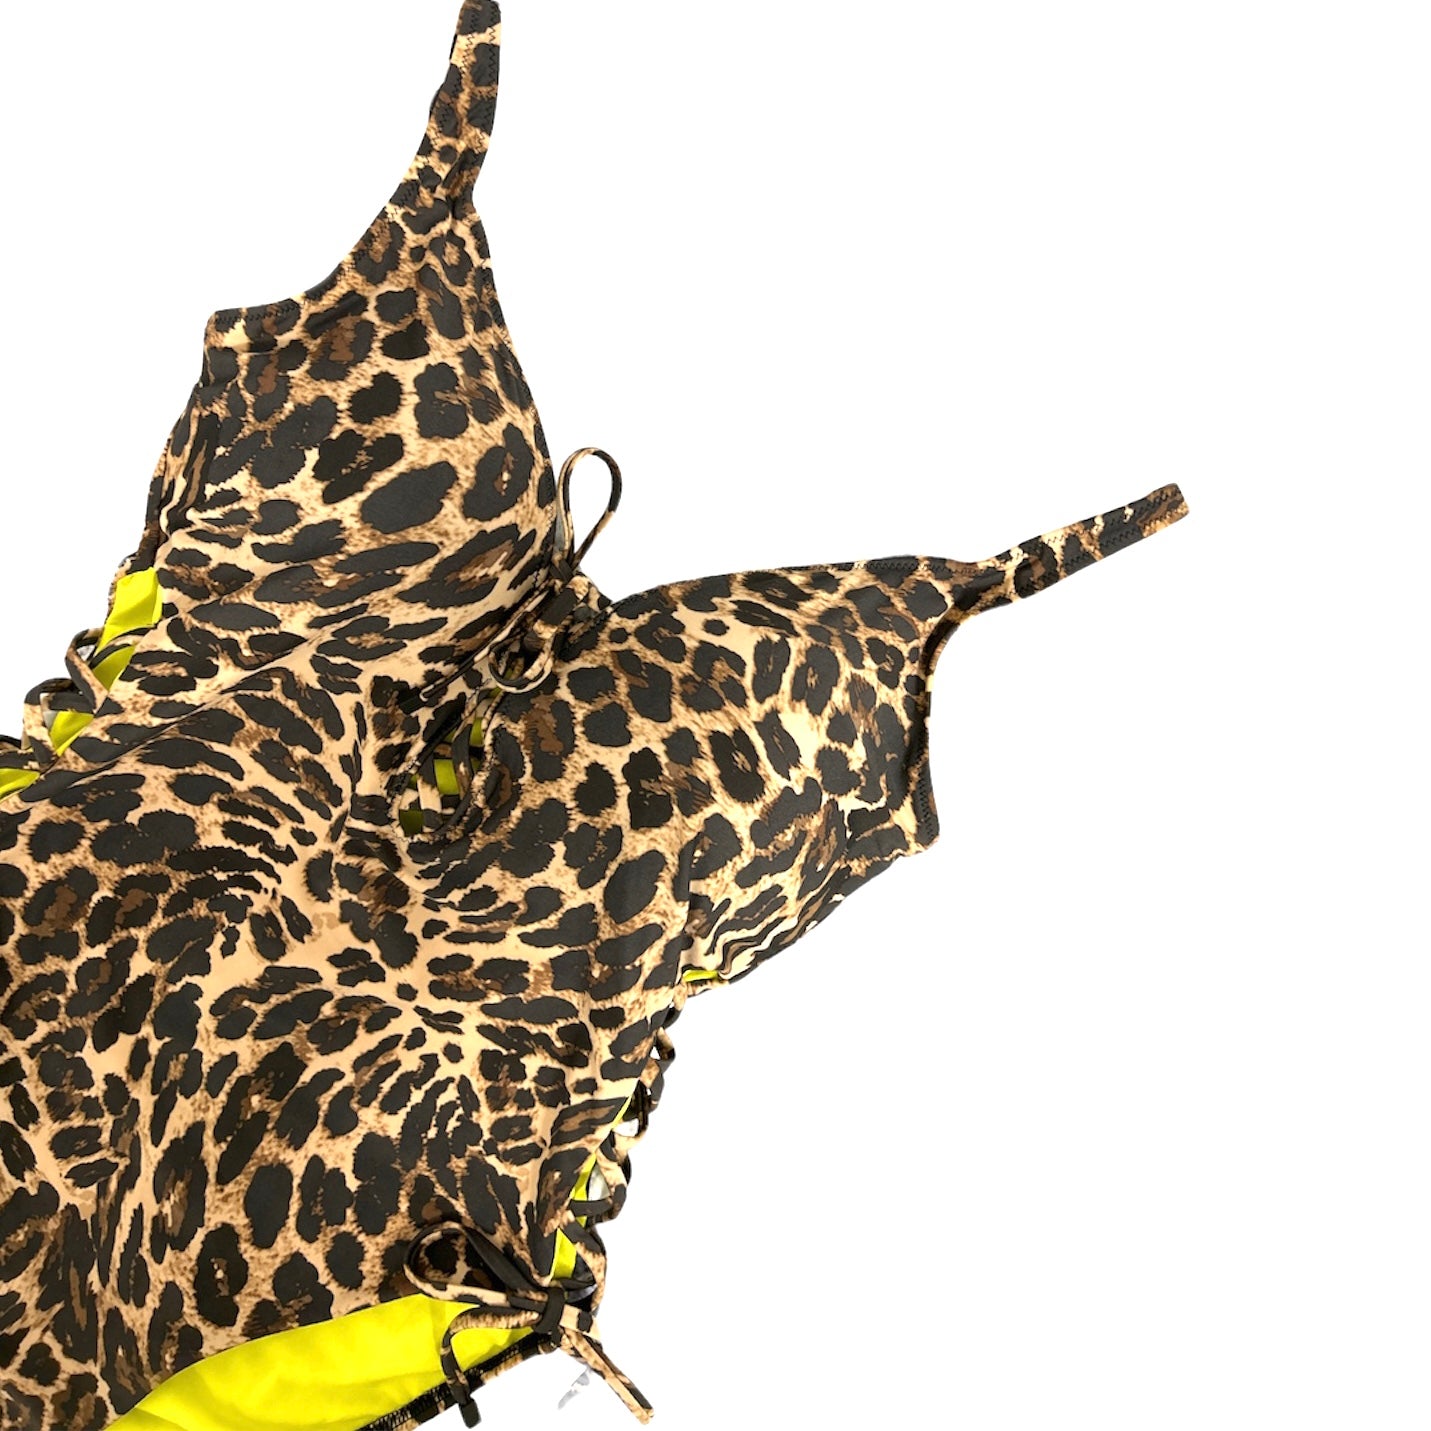 Beach Cheetah Lace-Up Animal Print Size M Swimsuit Women's Swimwear